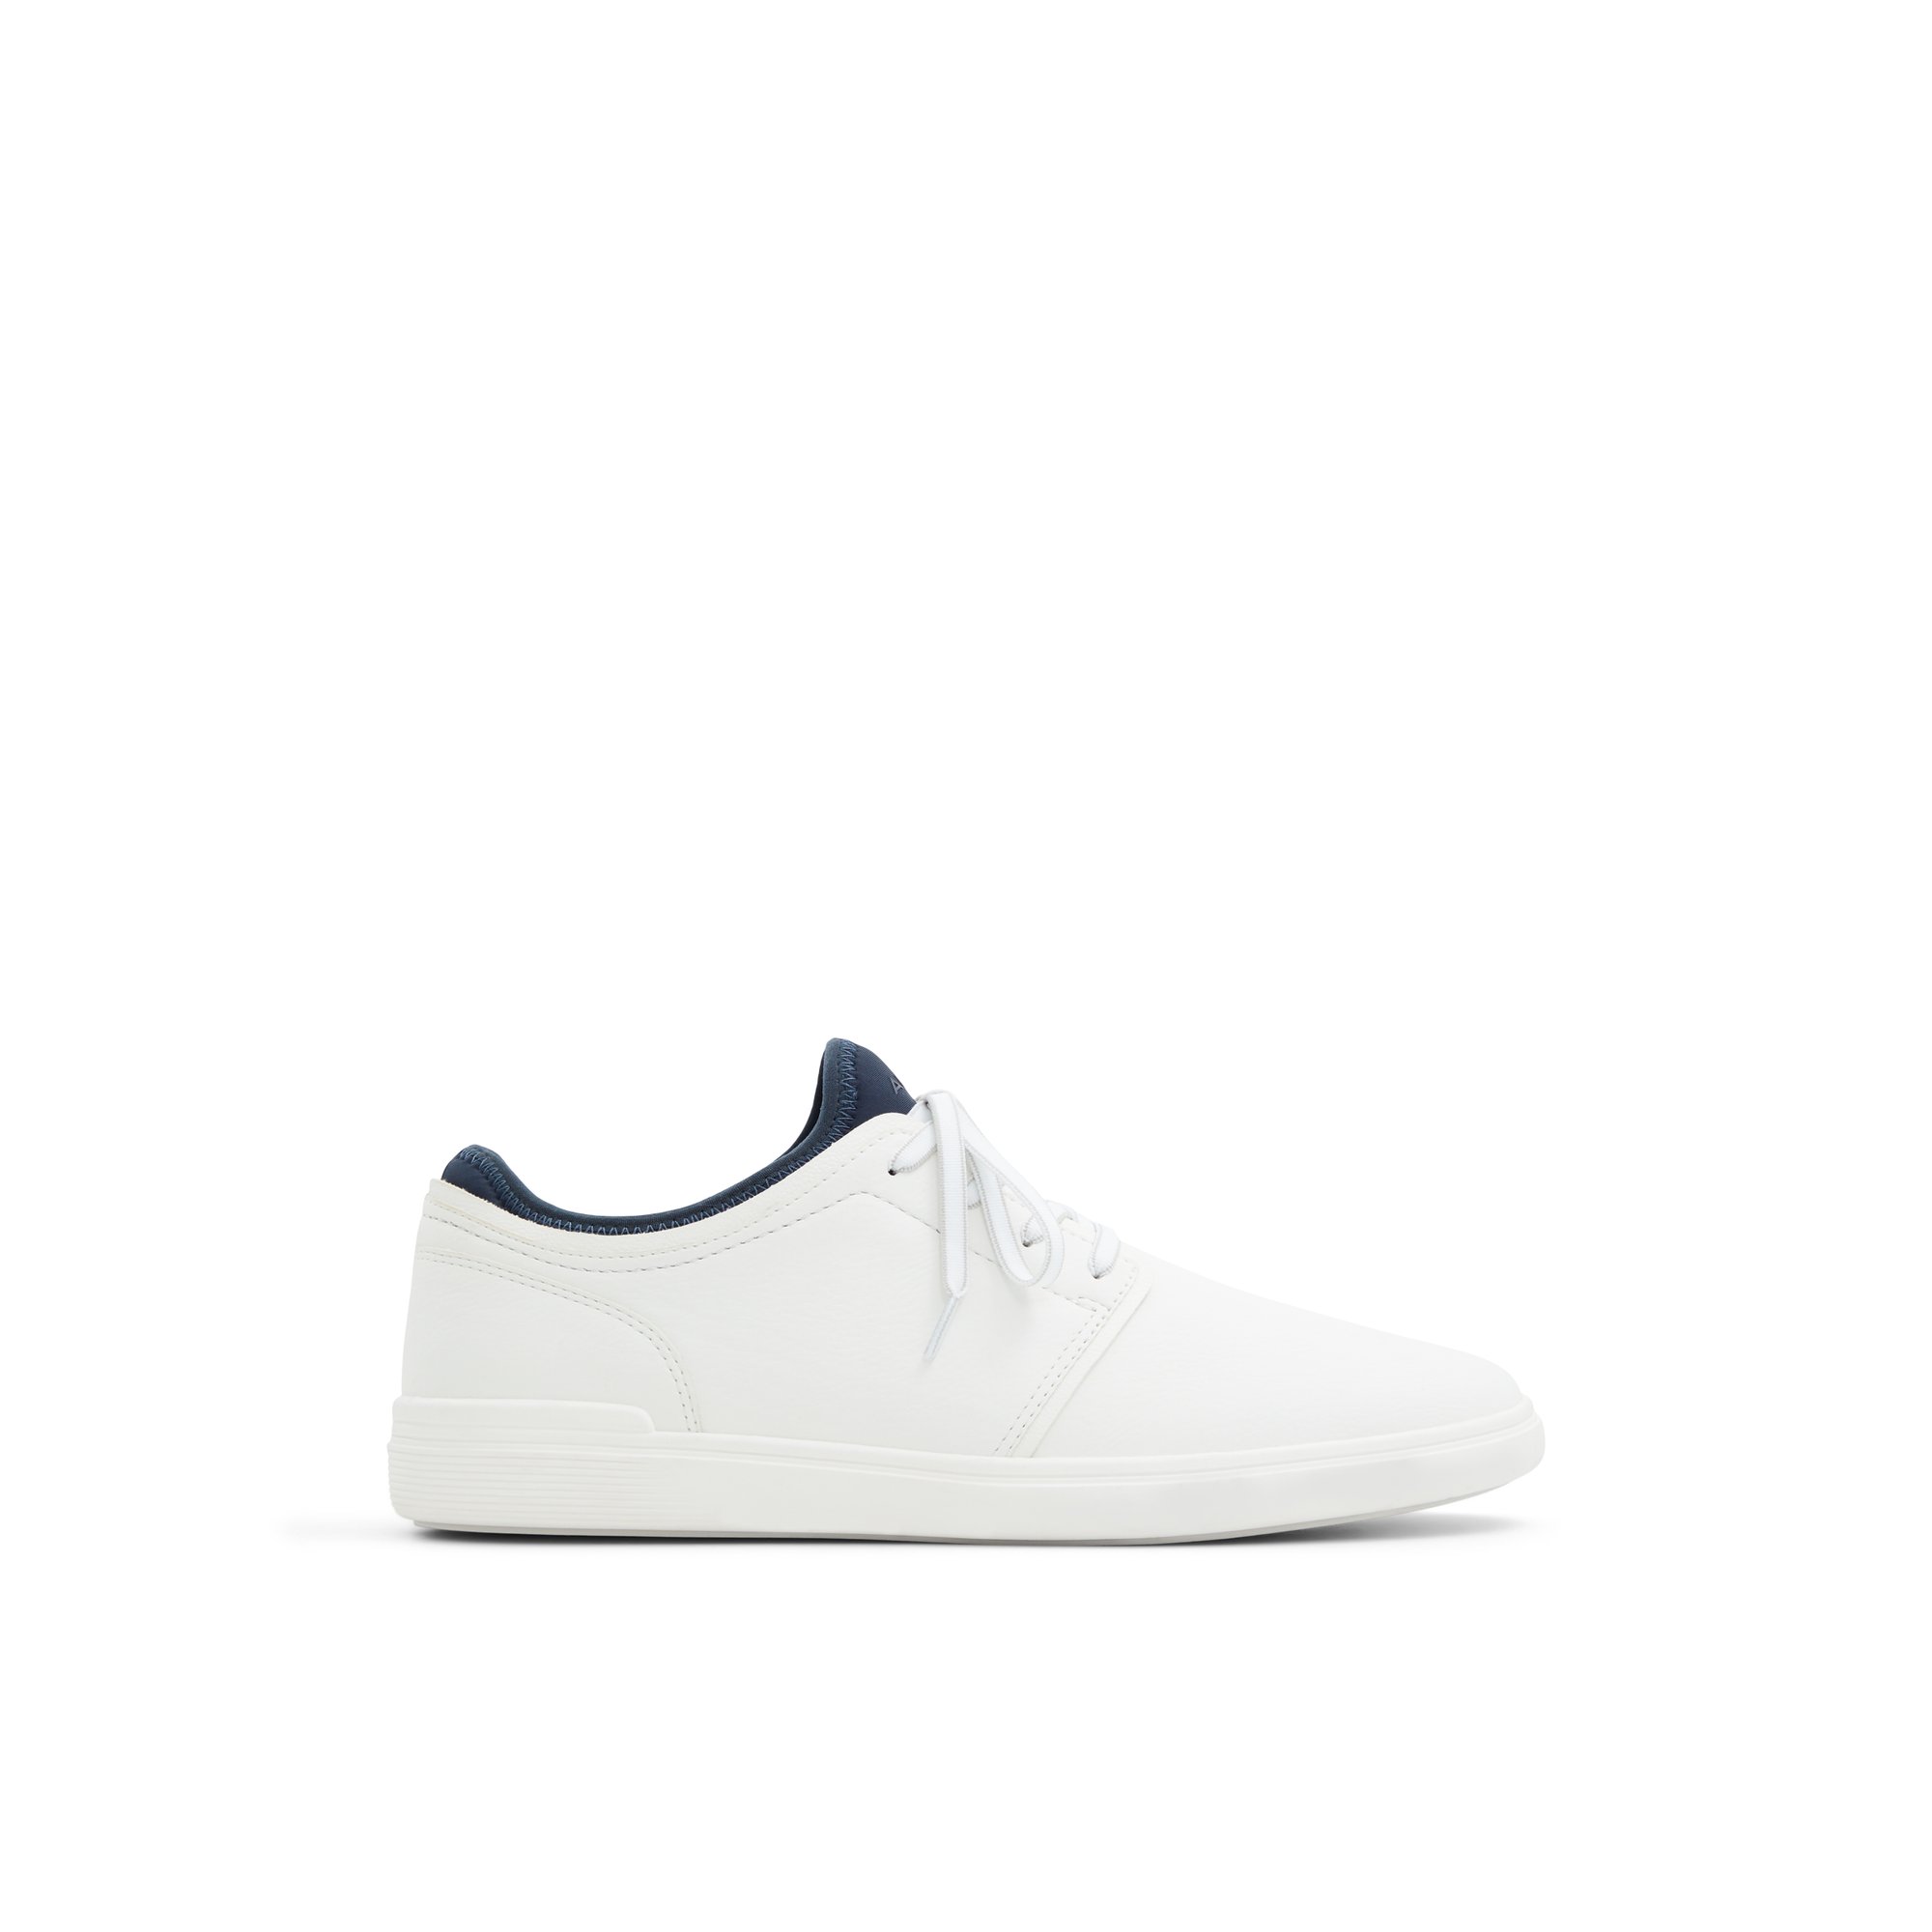 ALDO Omono - Men's Low Top Sneakers - White